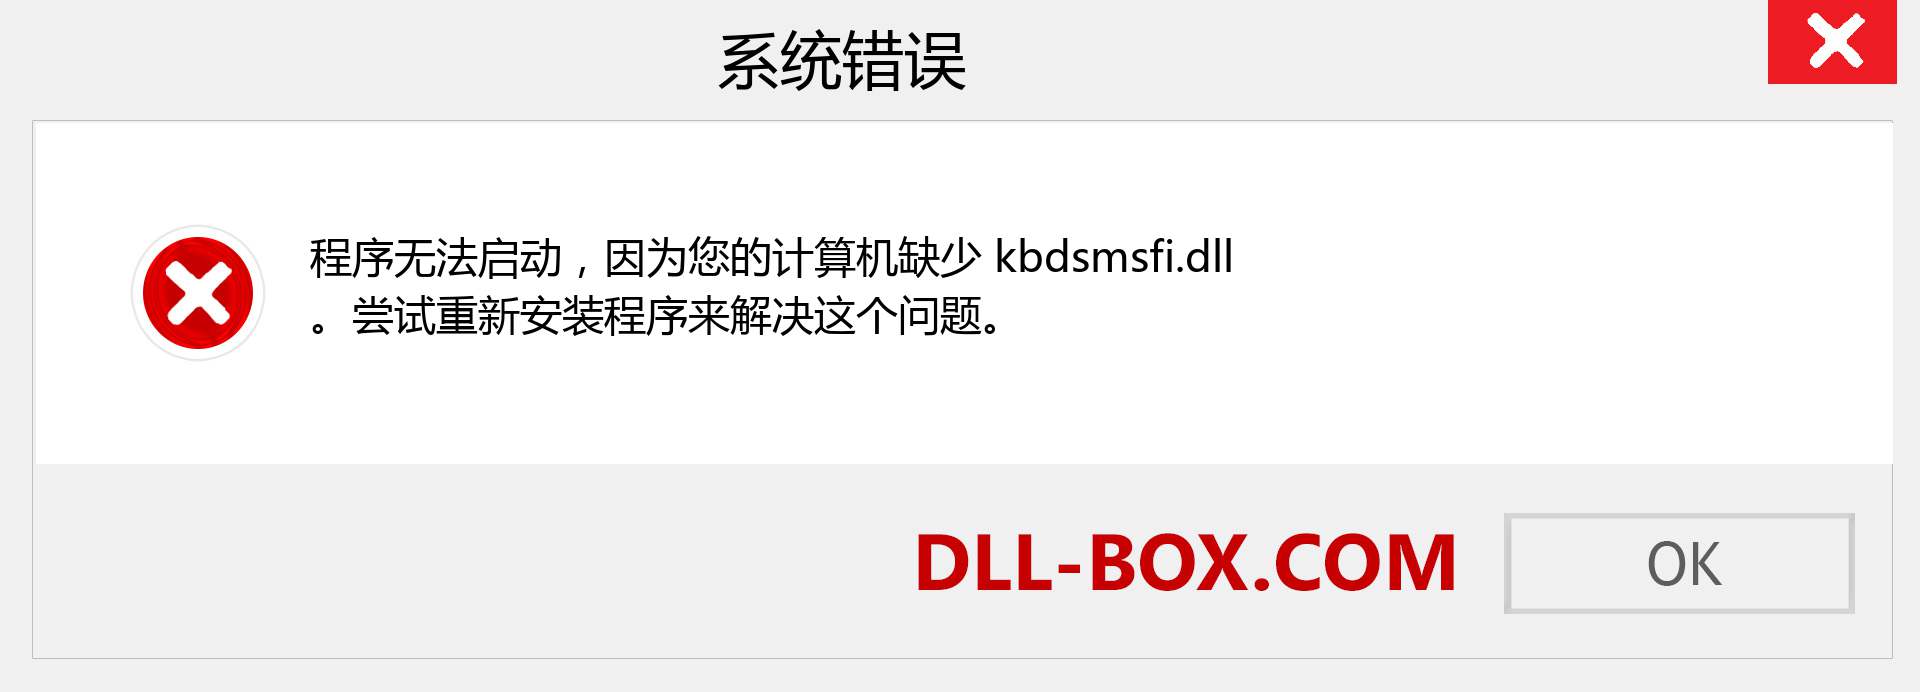 kbdsmsfi.dll 文件丢失？。 适用于 Windows 7、8、10 的下载 - 修复 Windows、照片、图像上的 kbdsmsfi dll 丢失错误